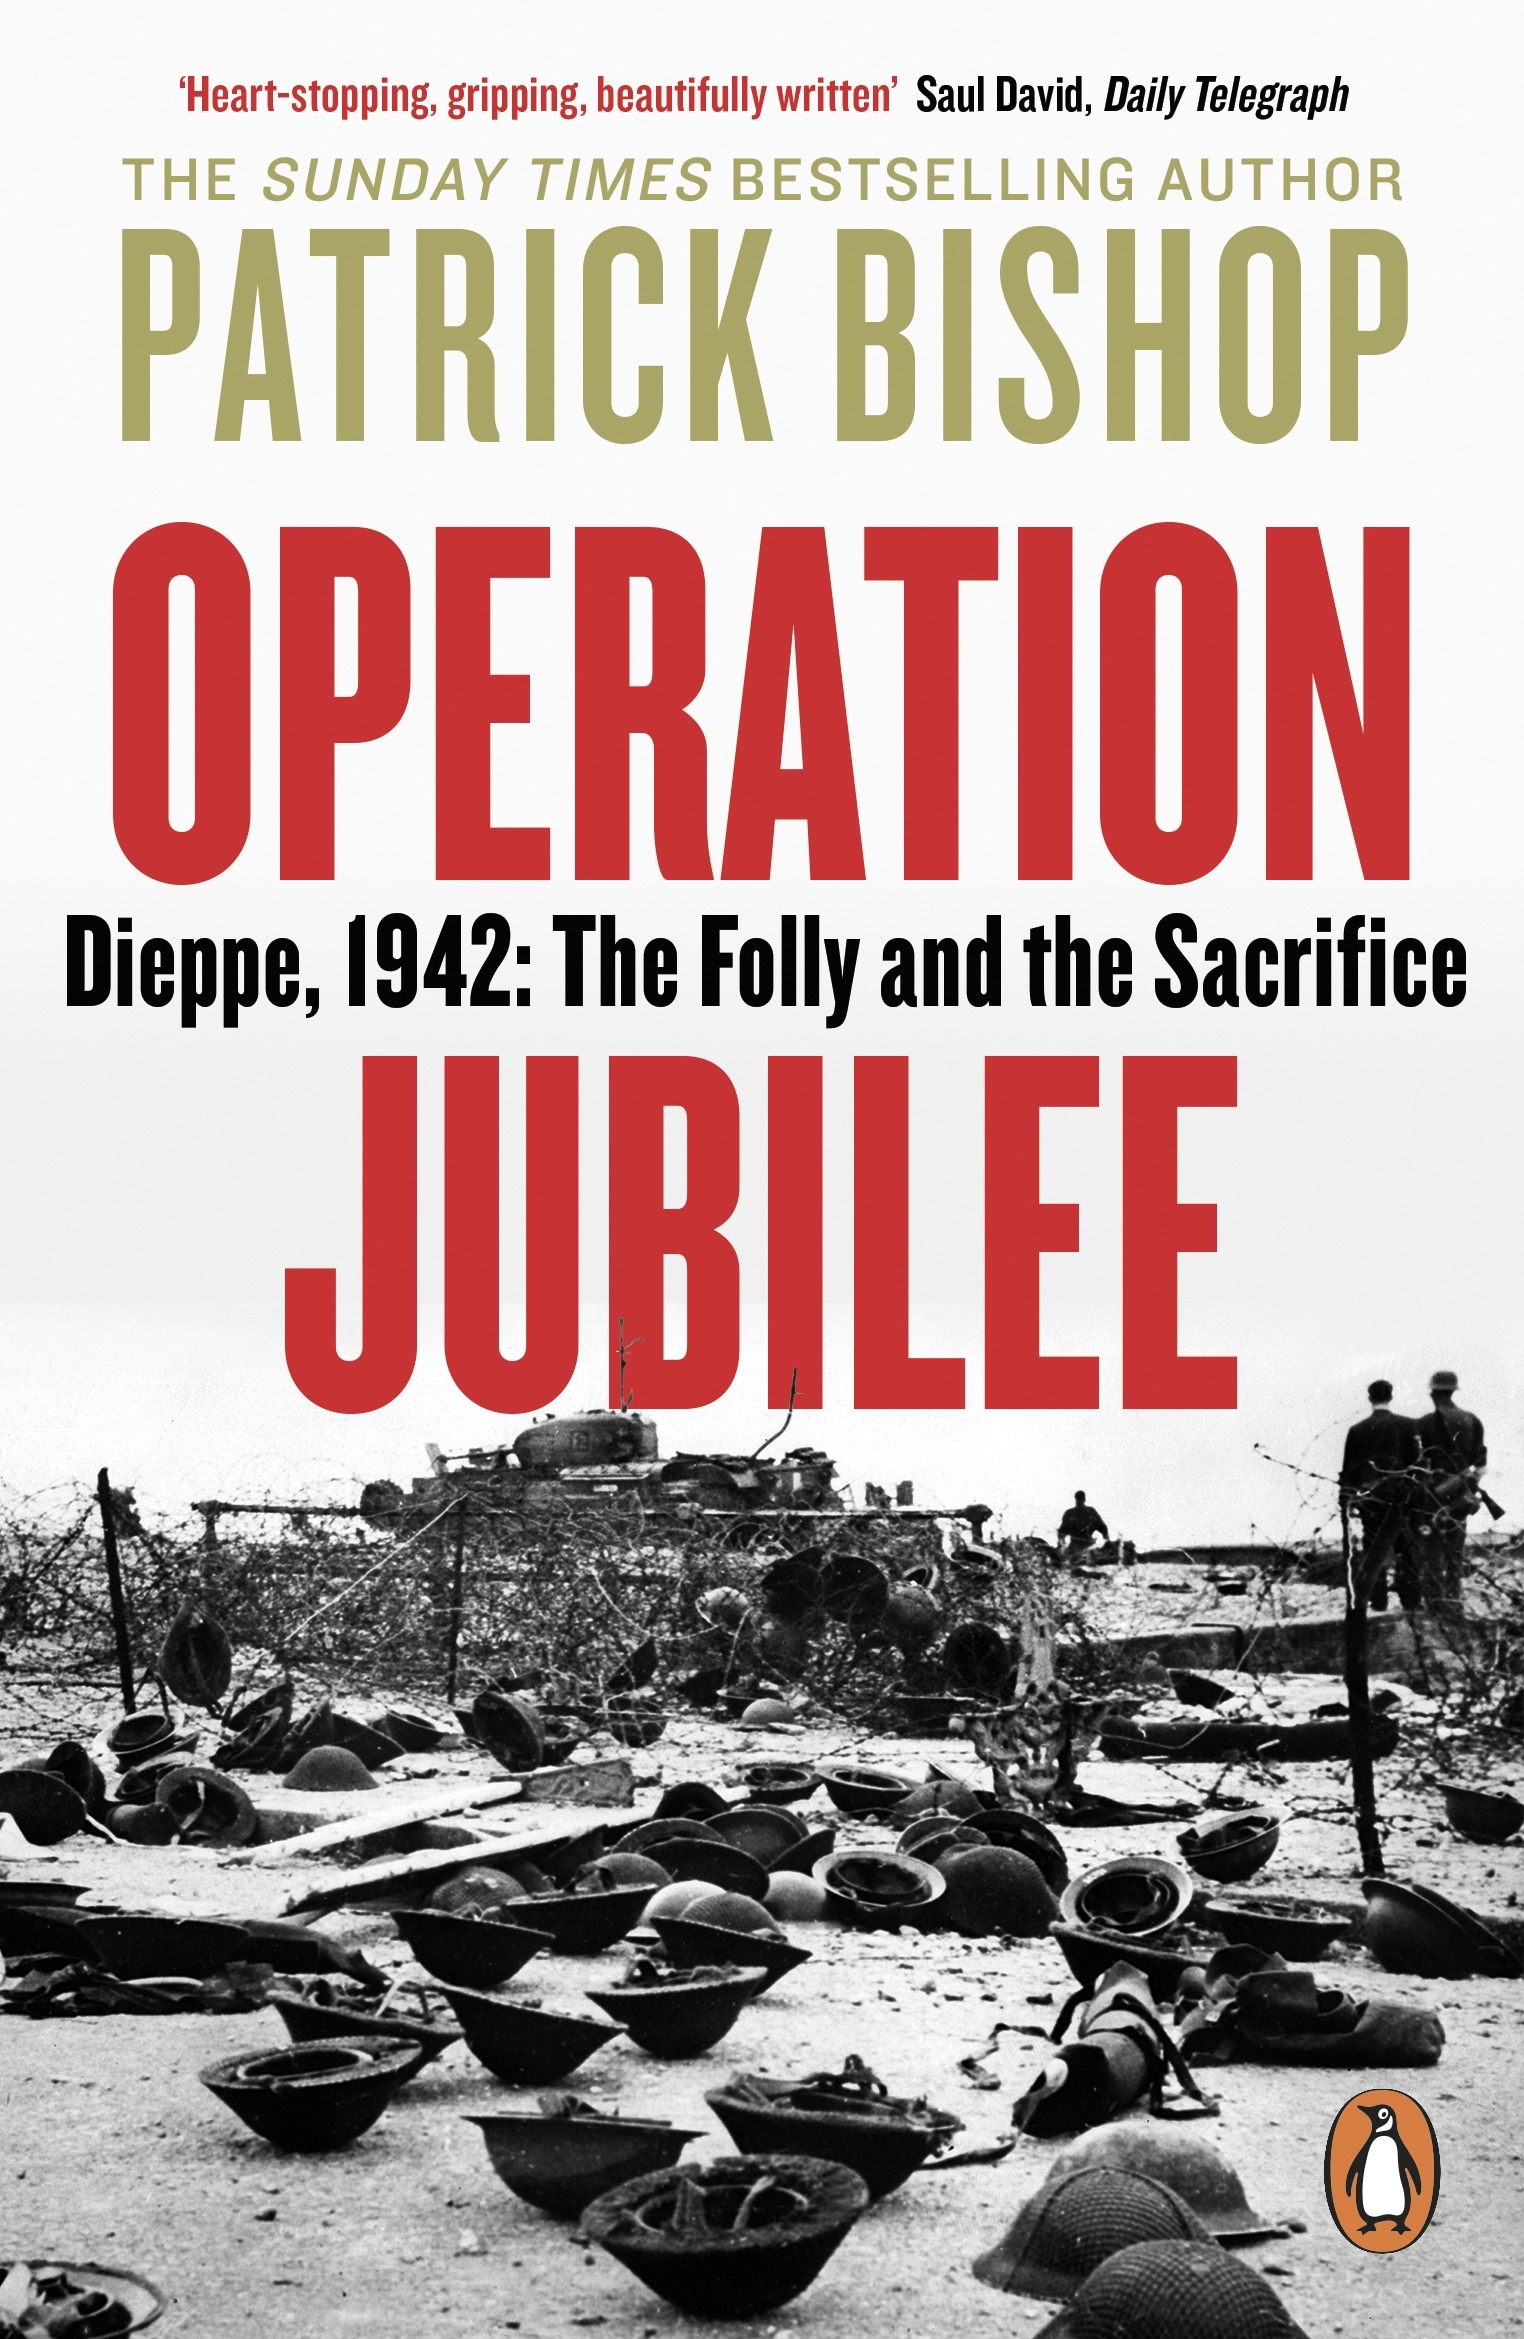 Book “Operation Jubilee” by Patrick Bishop — July 21, 2022